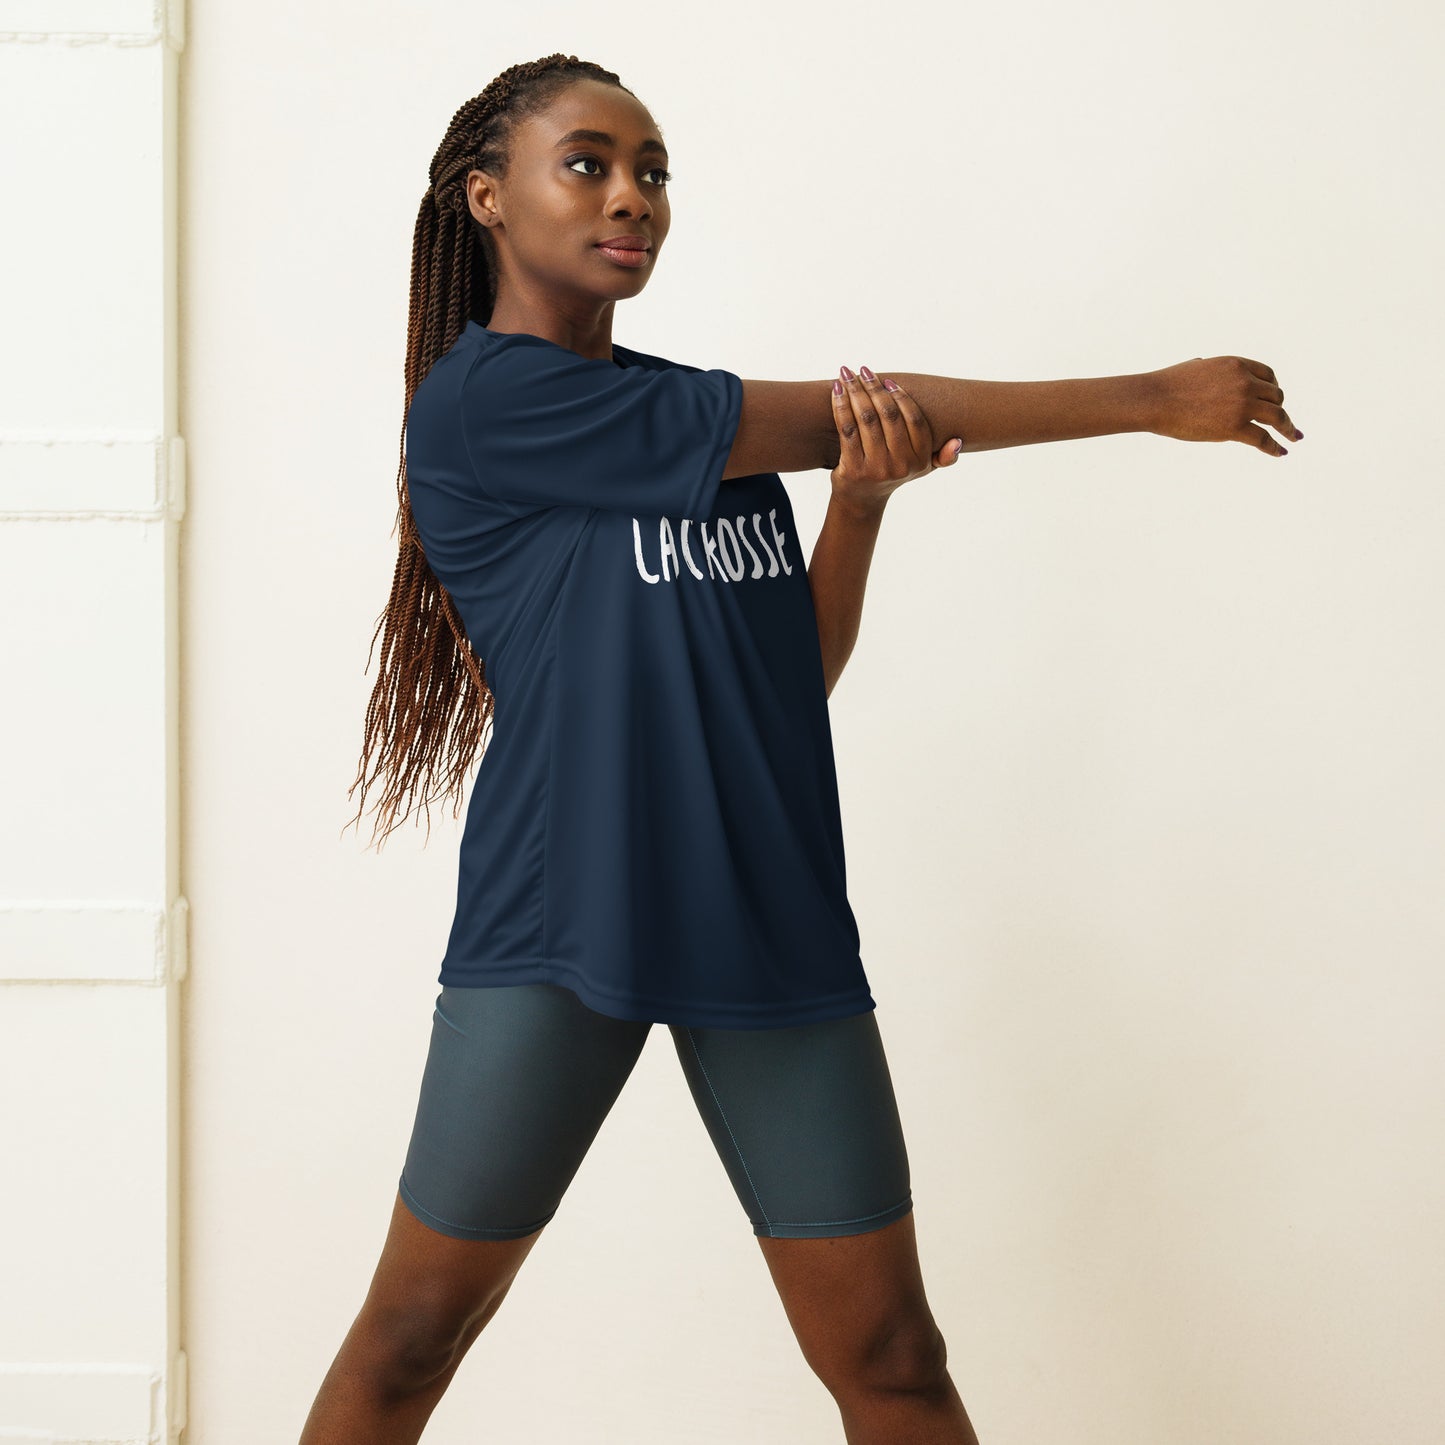 Unisex performance crew neck t-shirt - Lacrosse